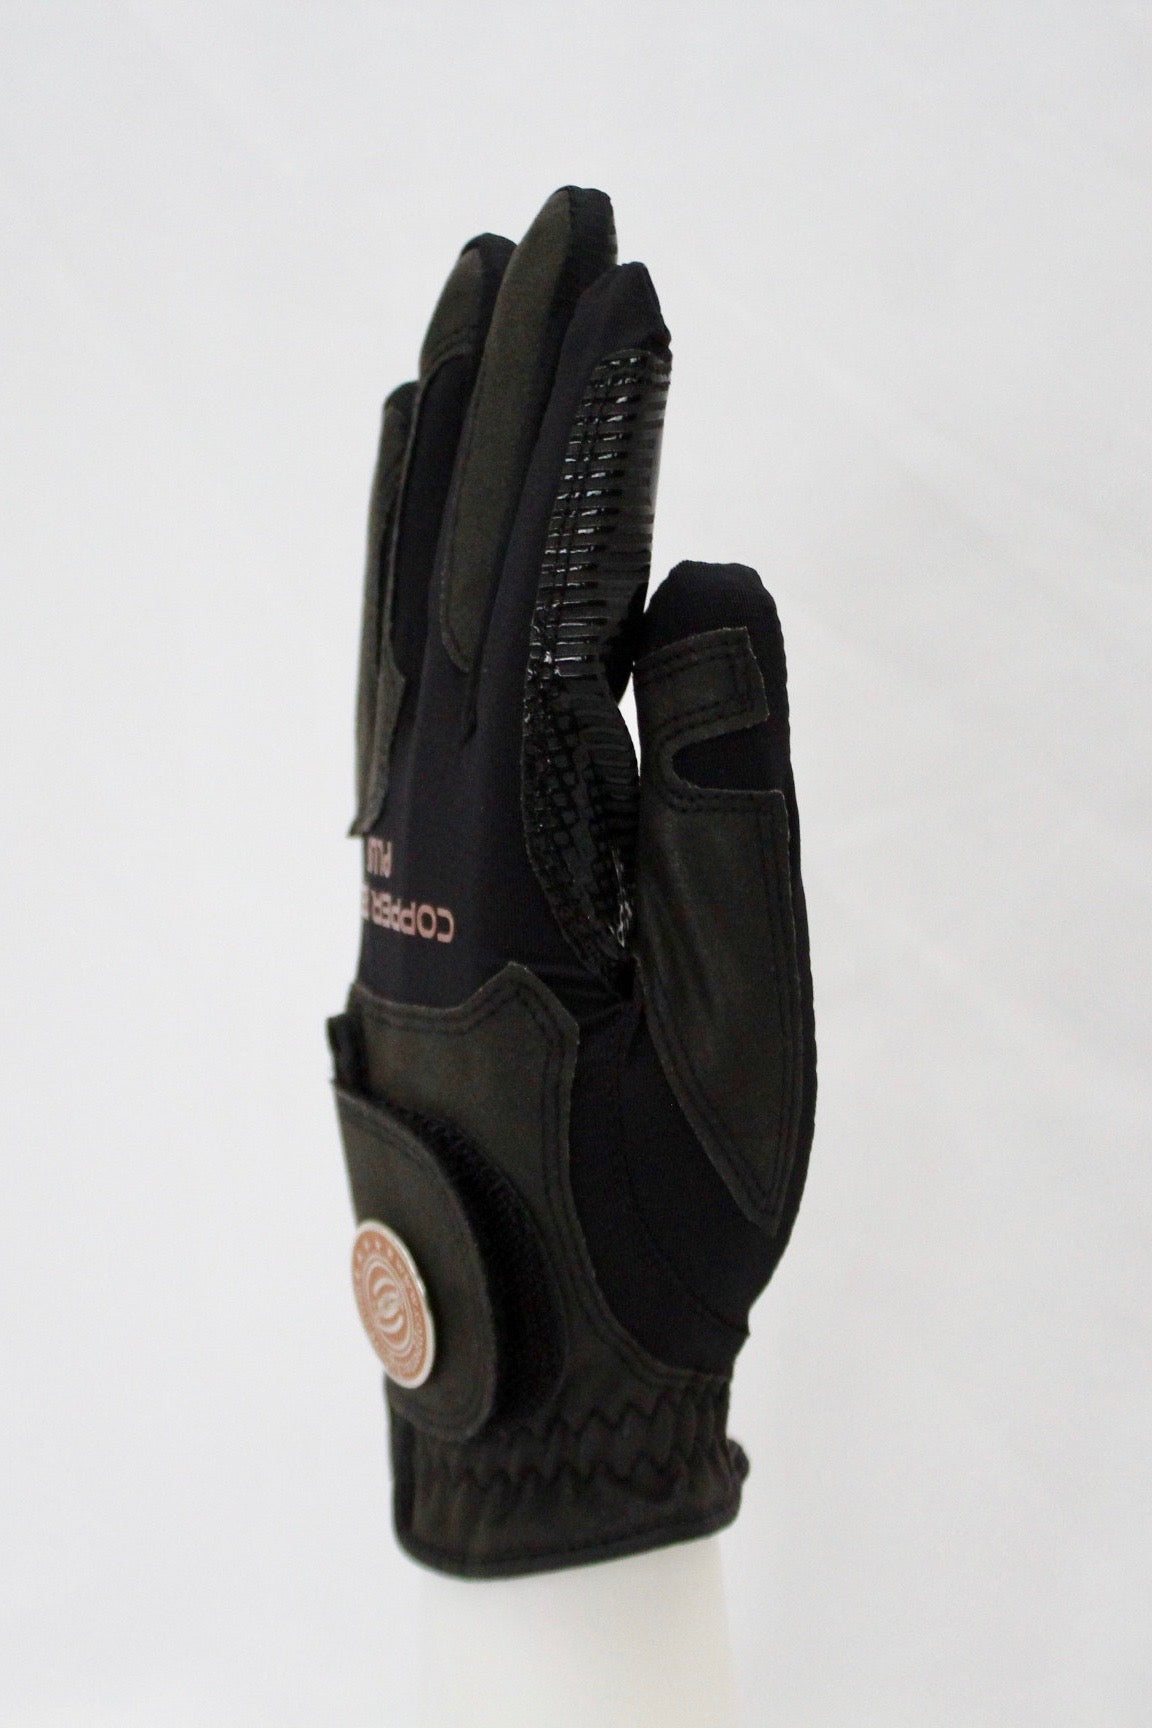 Copper Infused Golf Glove Black/Black – Copper Tech Gloves